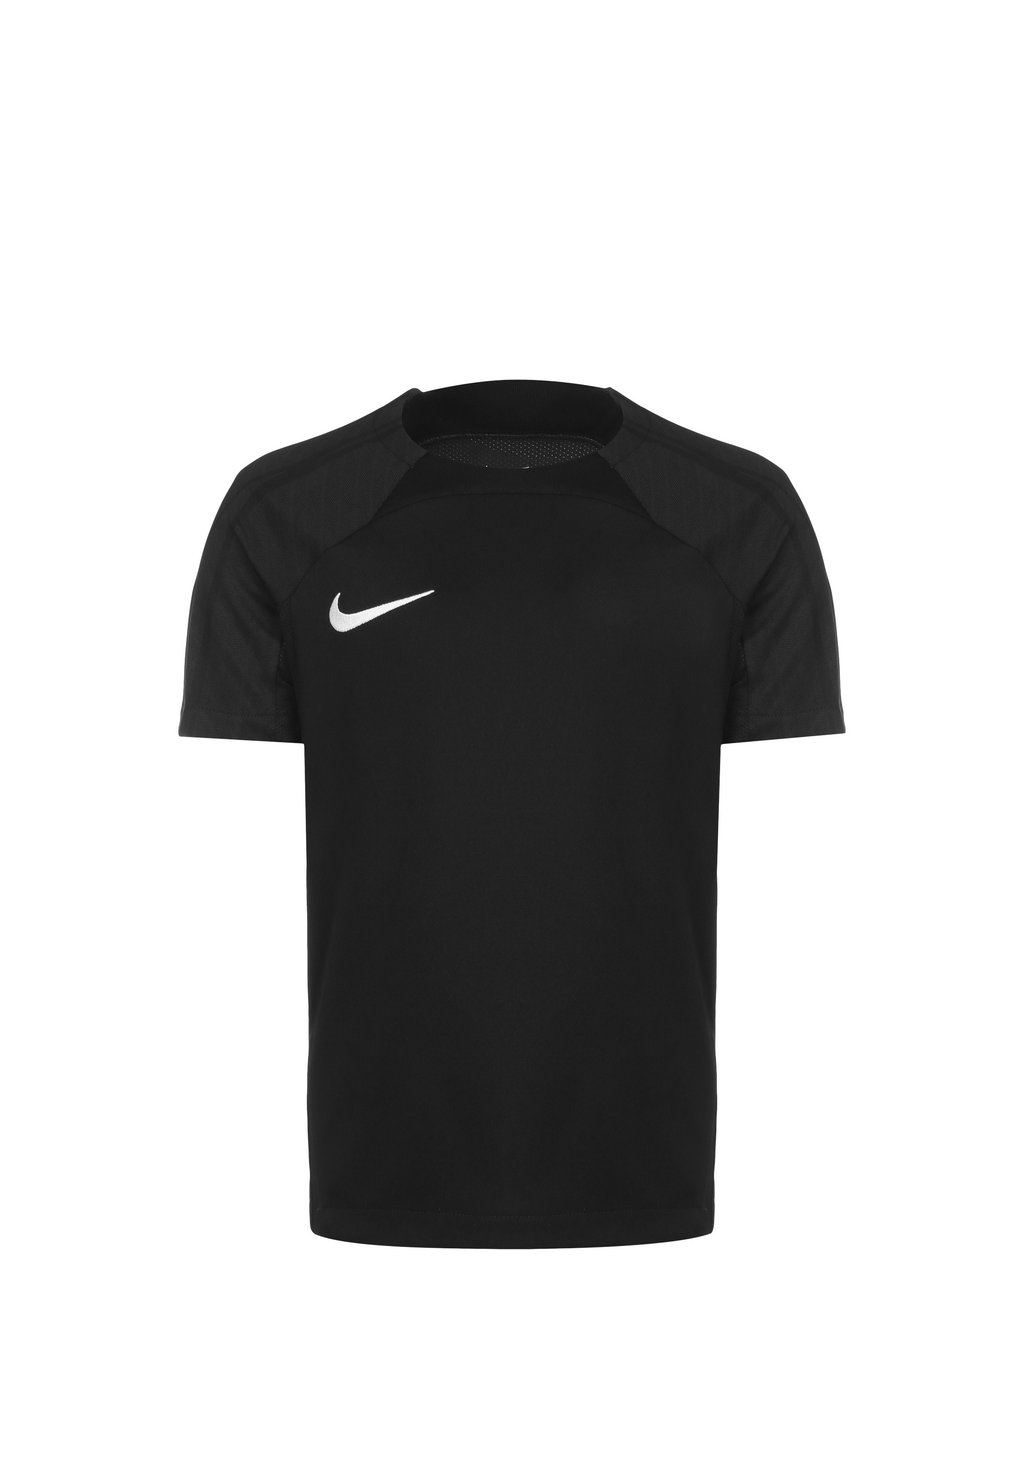 Спортивная футболка Strike Iii Nike, цвет black white